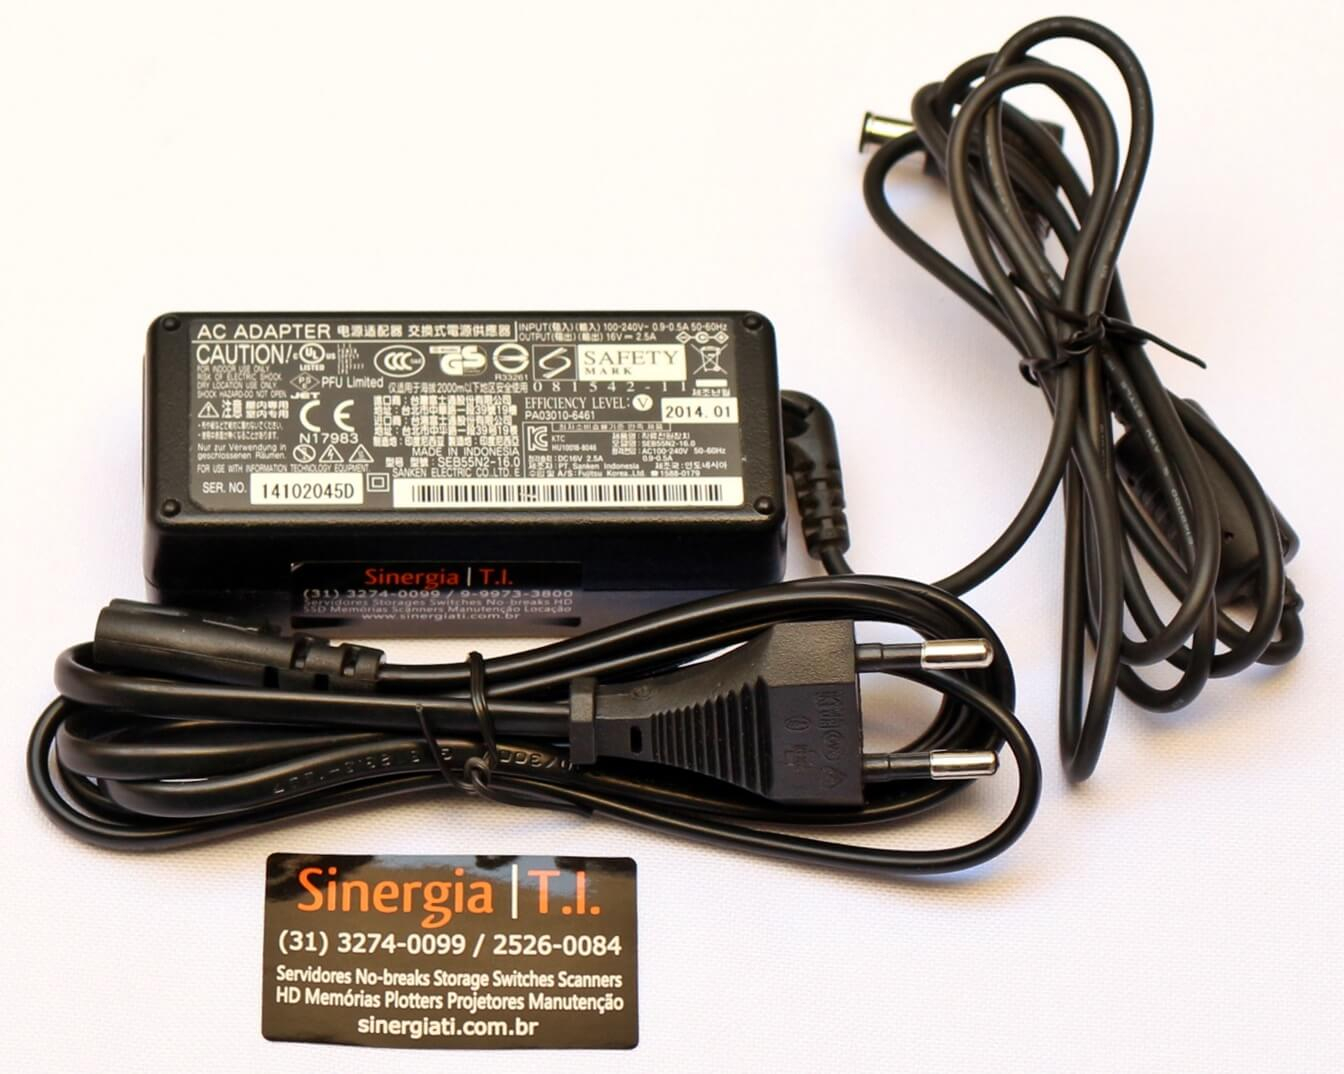 Fonte Original AC Adapter para Scanner Fujitsu modelo iX500 SV600 iX1400 iX1500 iX1600 S500 S510 - PN: PA03010-6461 PA03010-6683pronta entrega